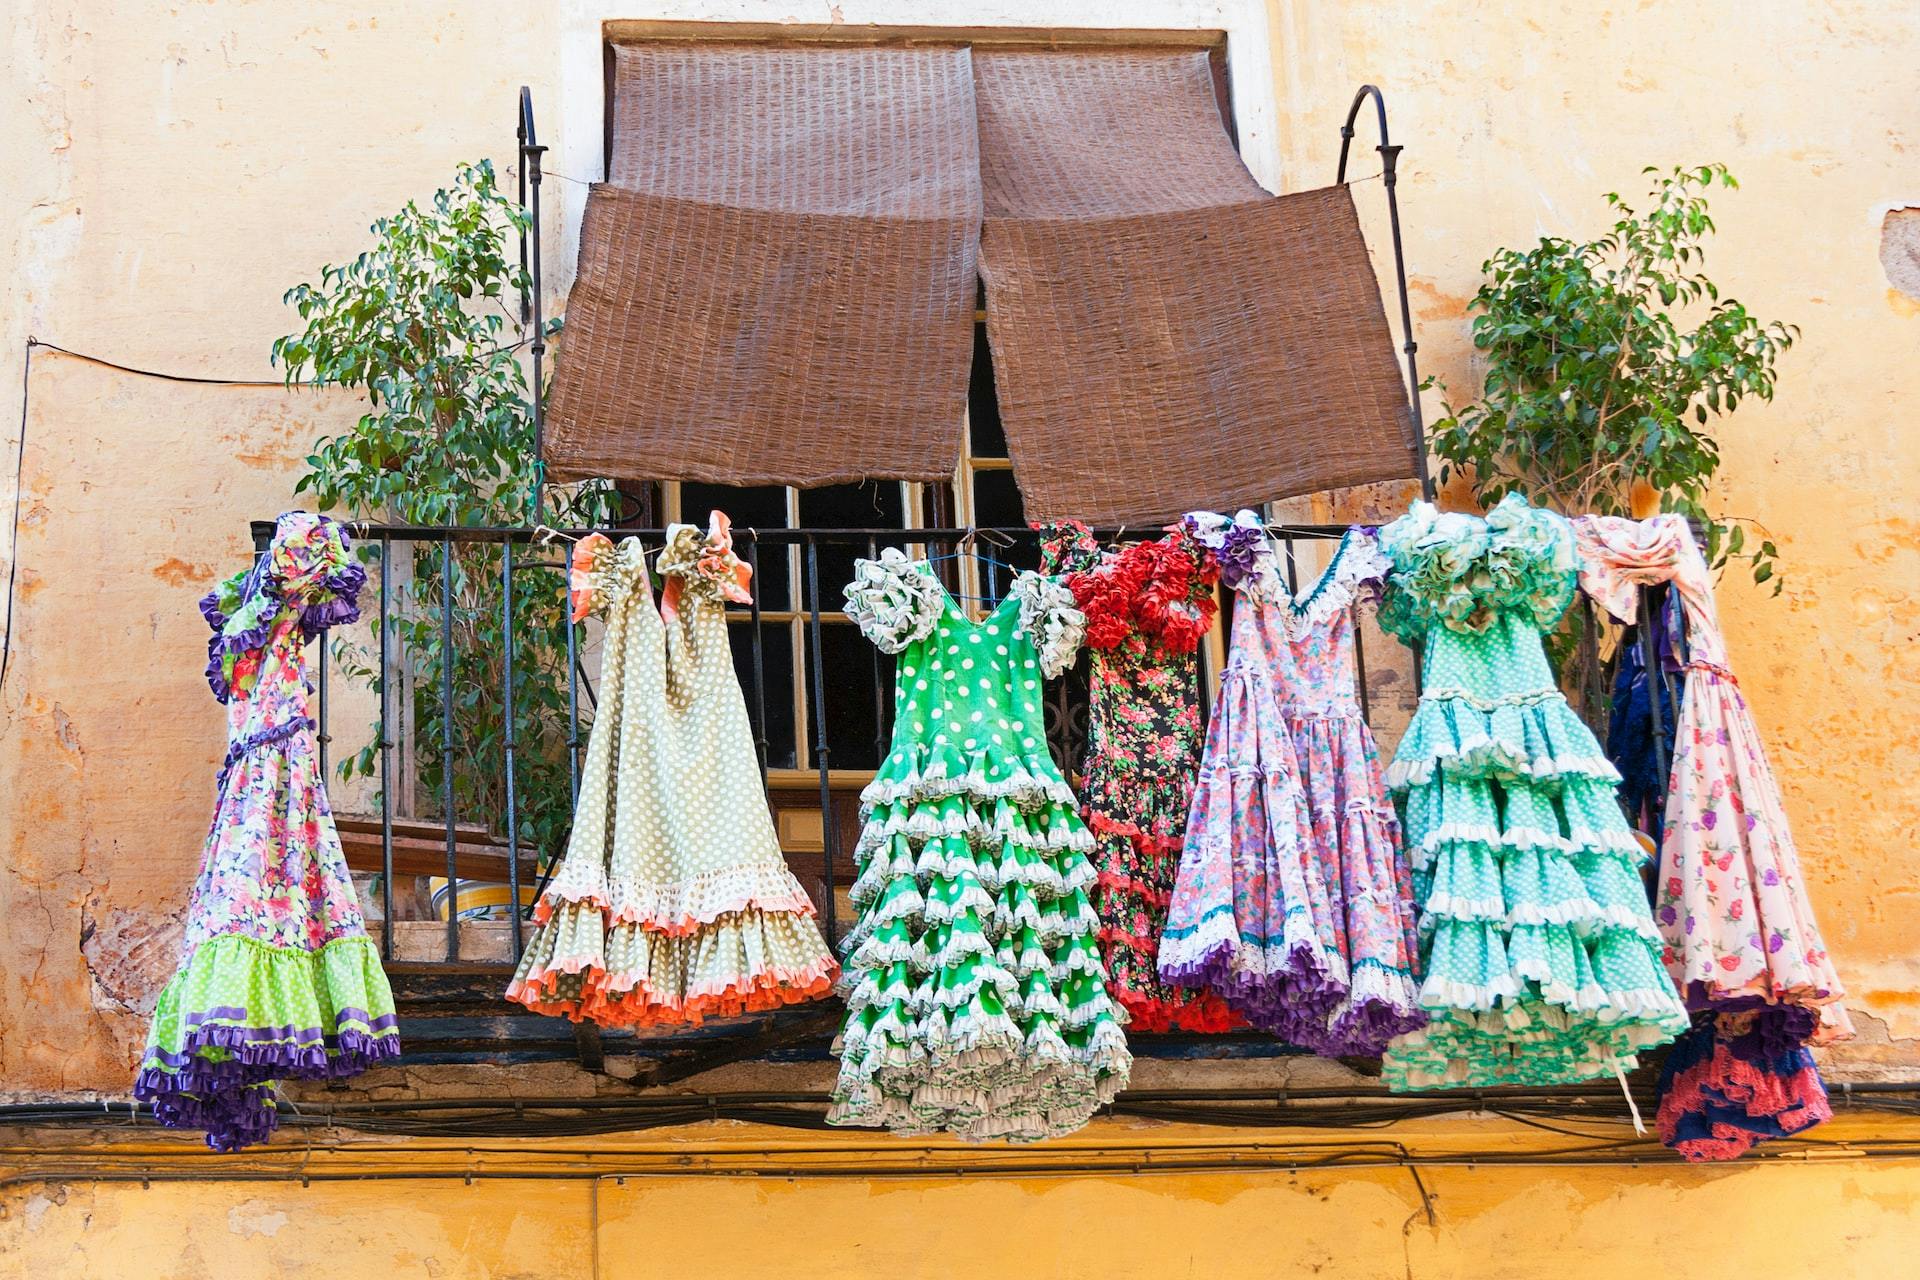 A journey through Flamenco culture in Seville